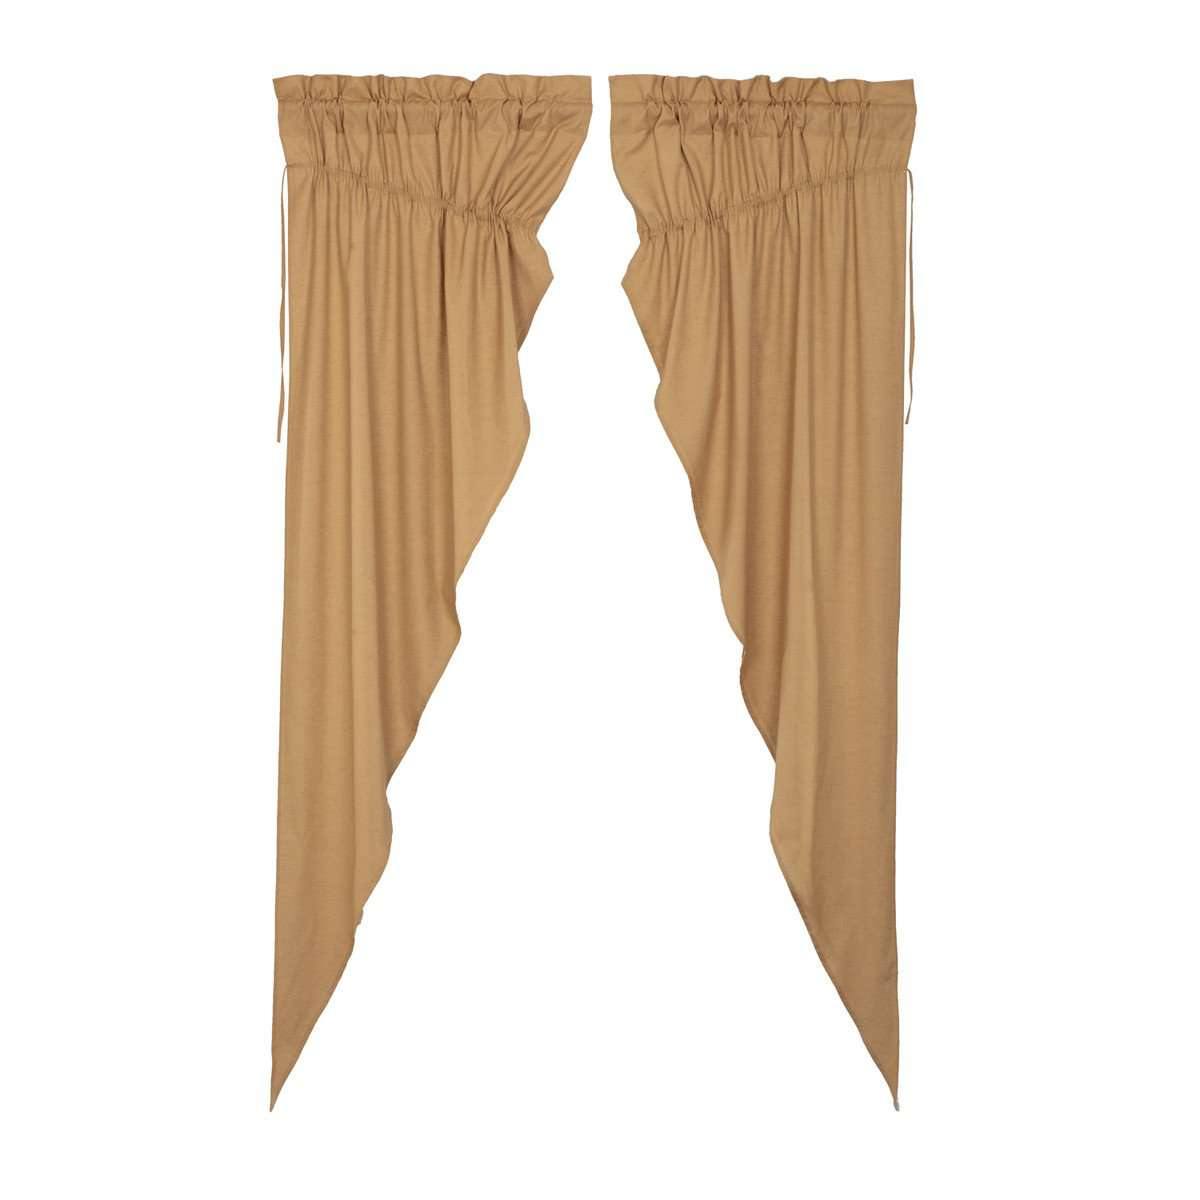 Simple Life Flax Khaki Prairie Long Panel Curtain Set of 2 84x36x18 VHC Brands - The Fox Decor